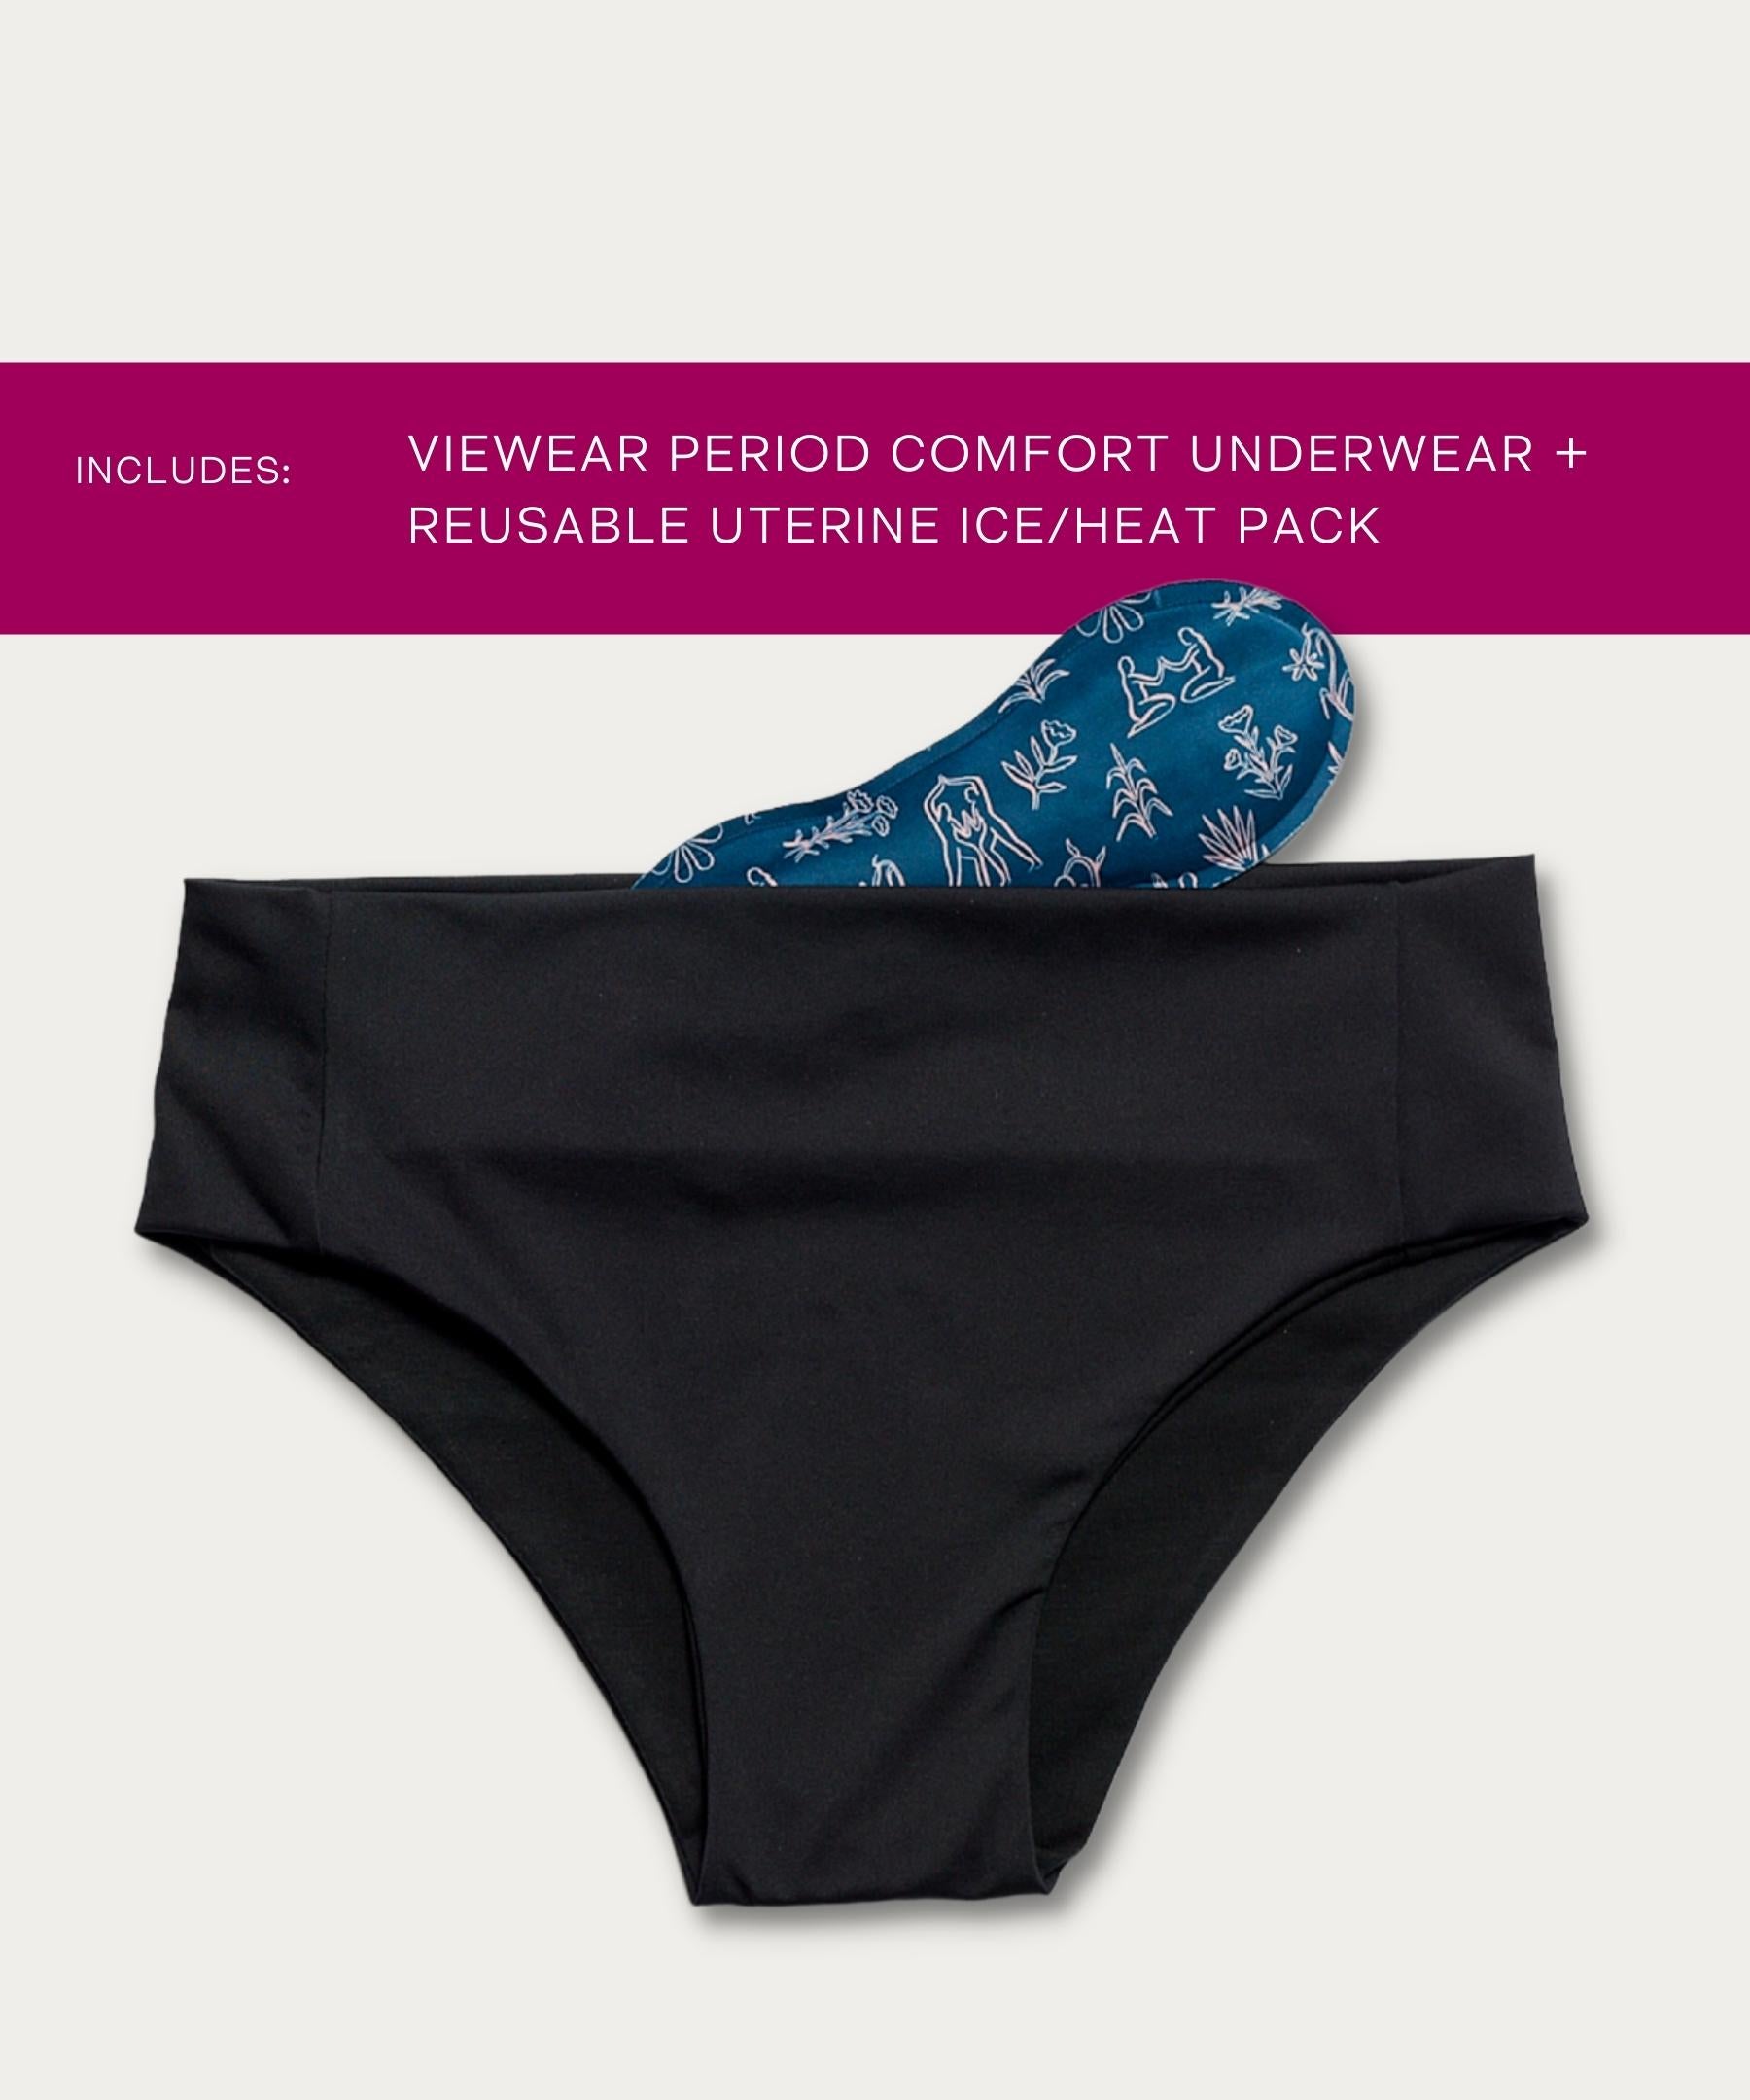 VieWear Period Comfort Underwear & Uterine Reusable Ice/Heat Pack